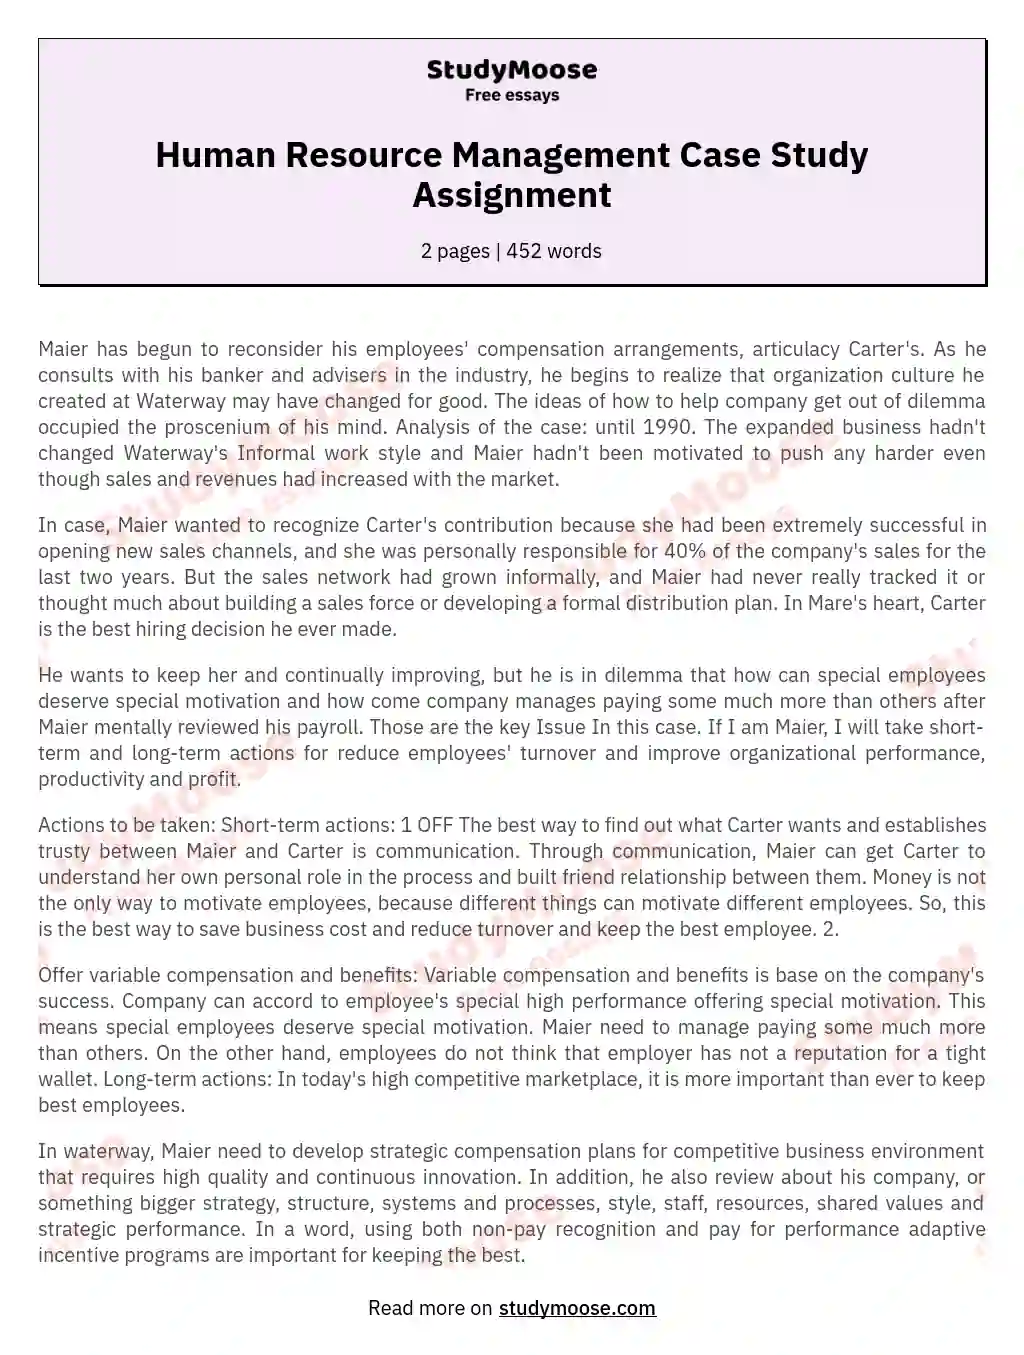 Human Resource Management Case Study Assignment essay